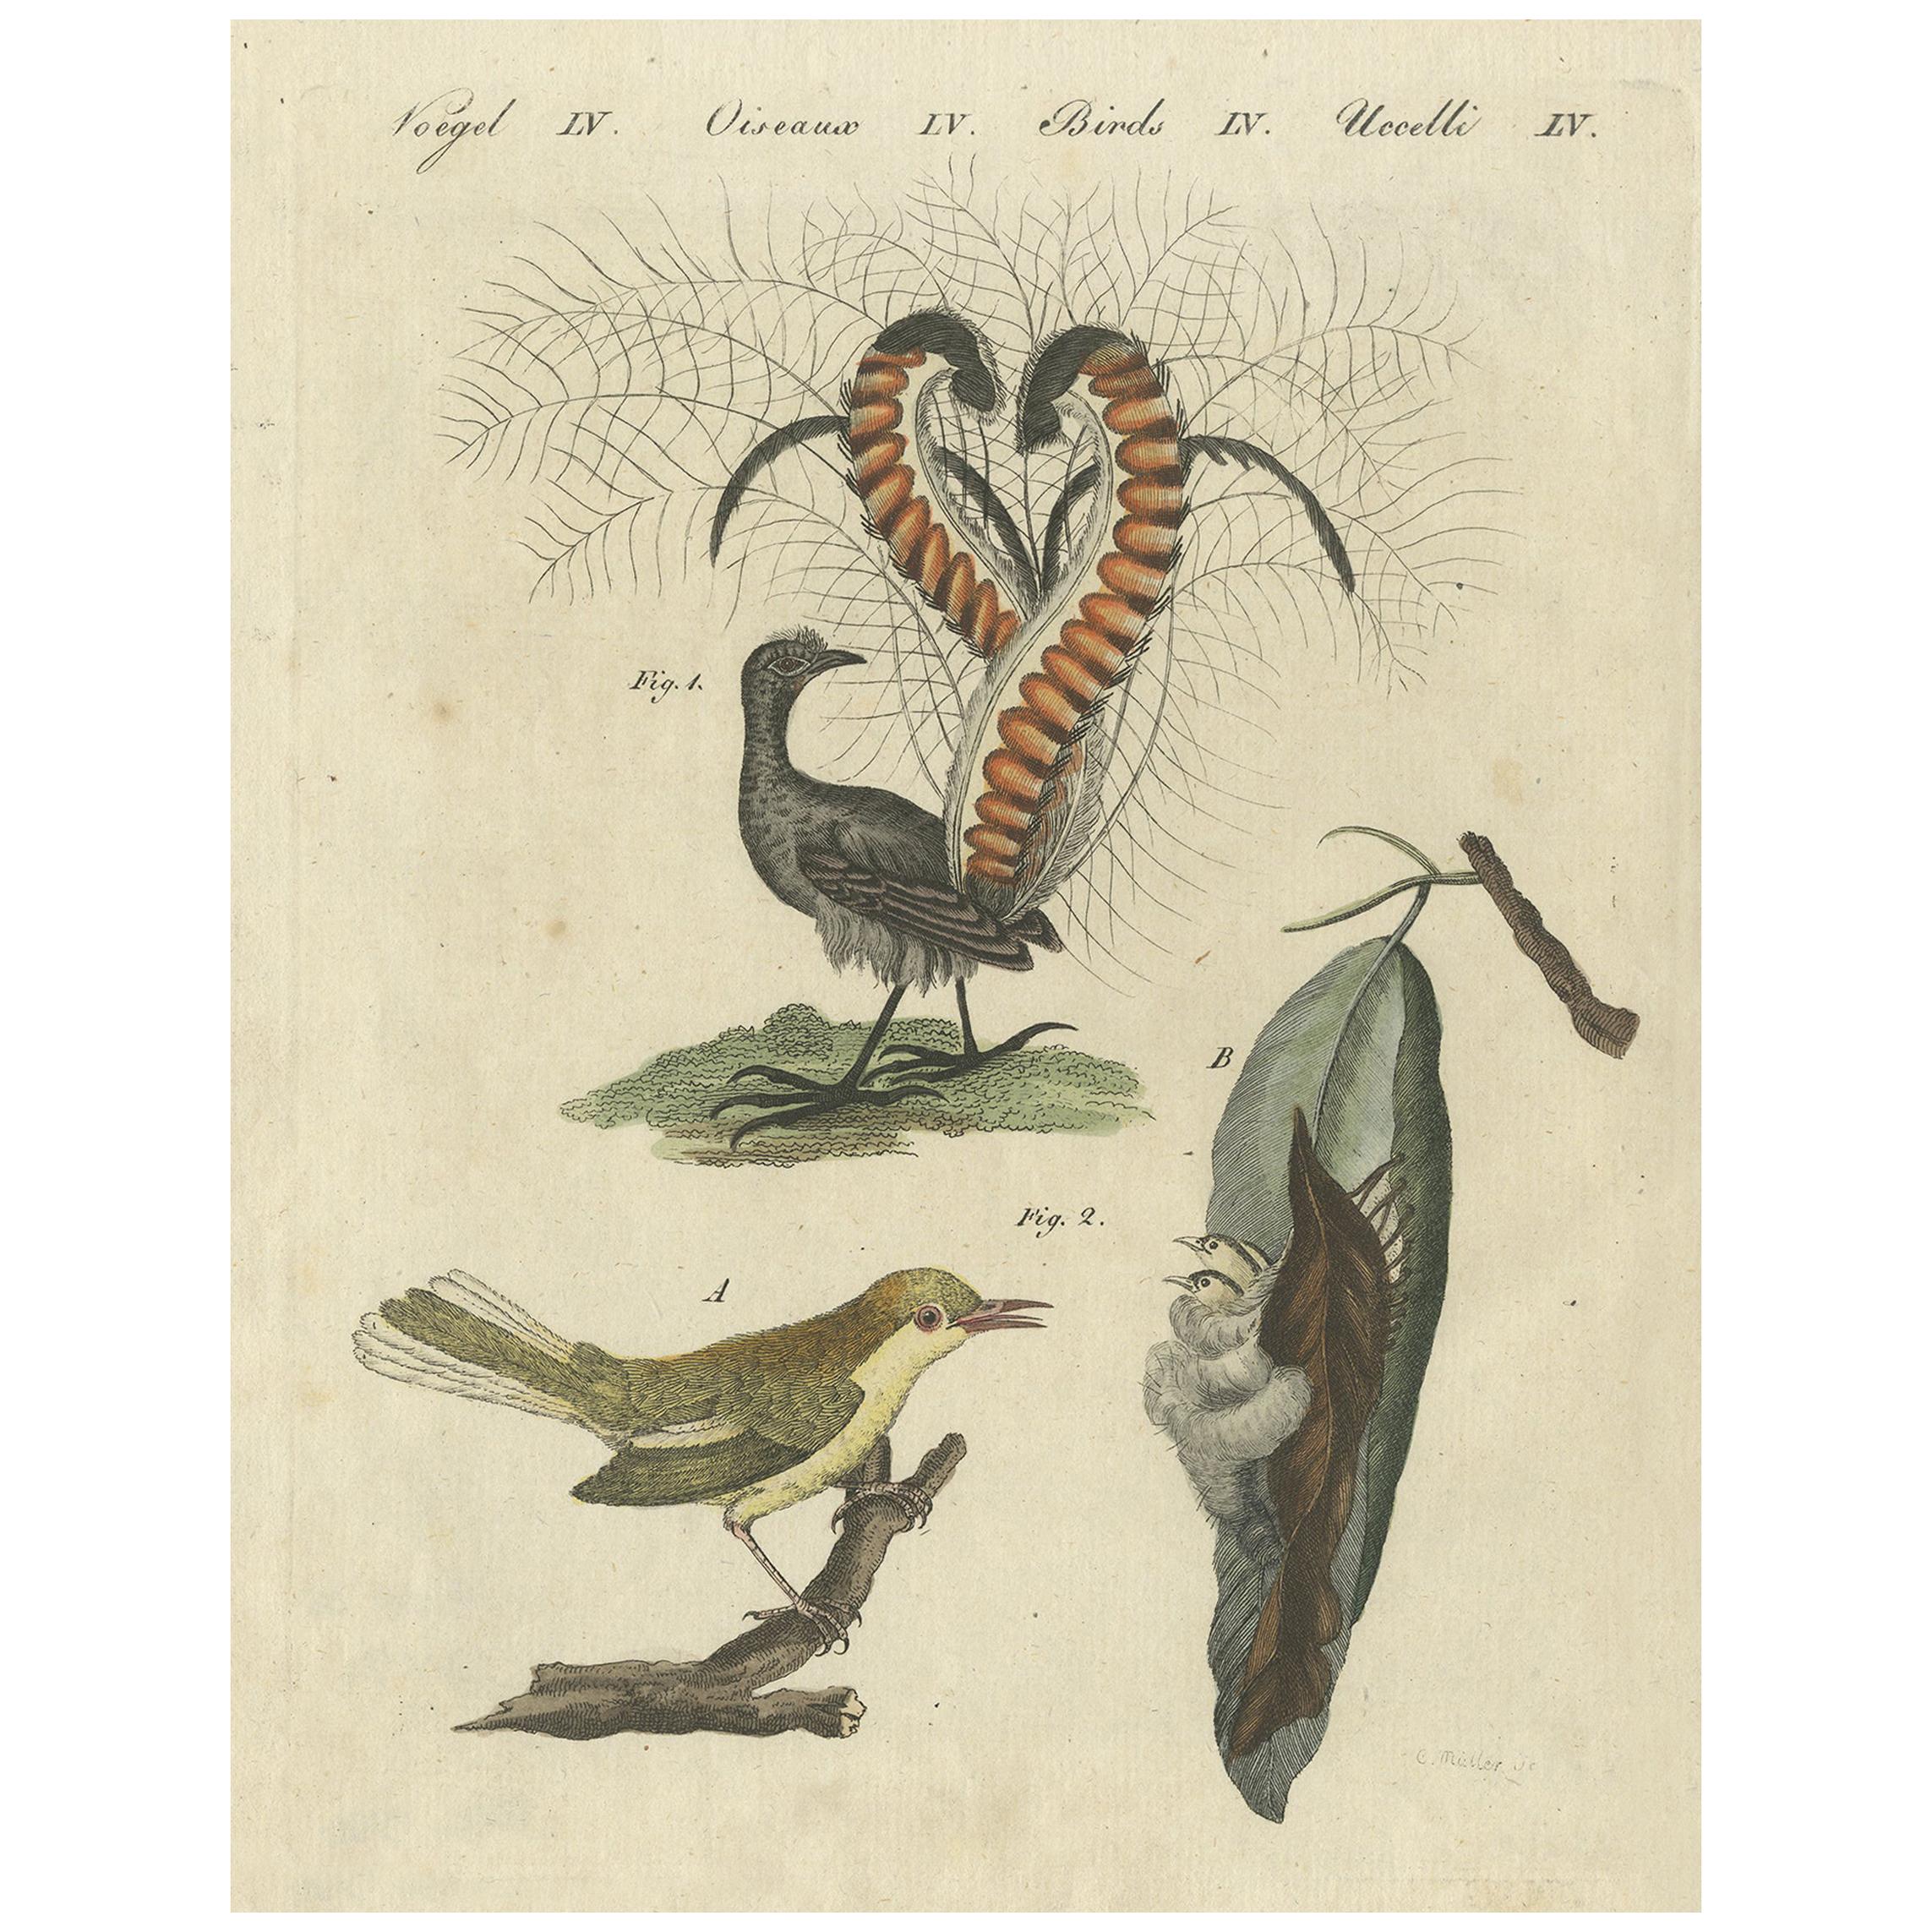 Antique Bird Print of the Lyrebird and Tailorbird by Bertuch 'circa 1800'